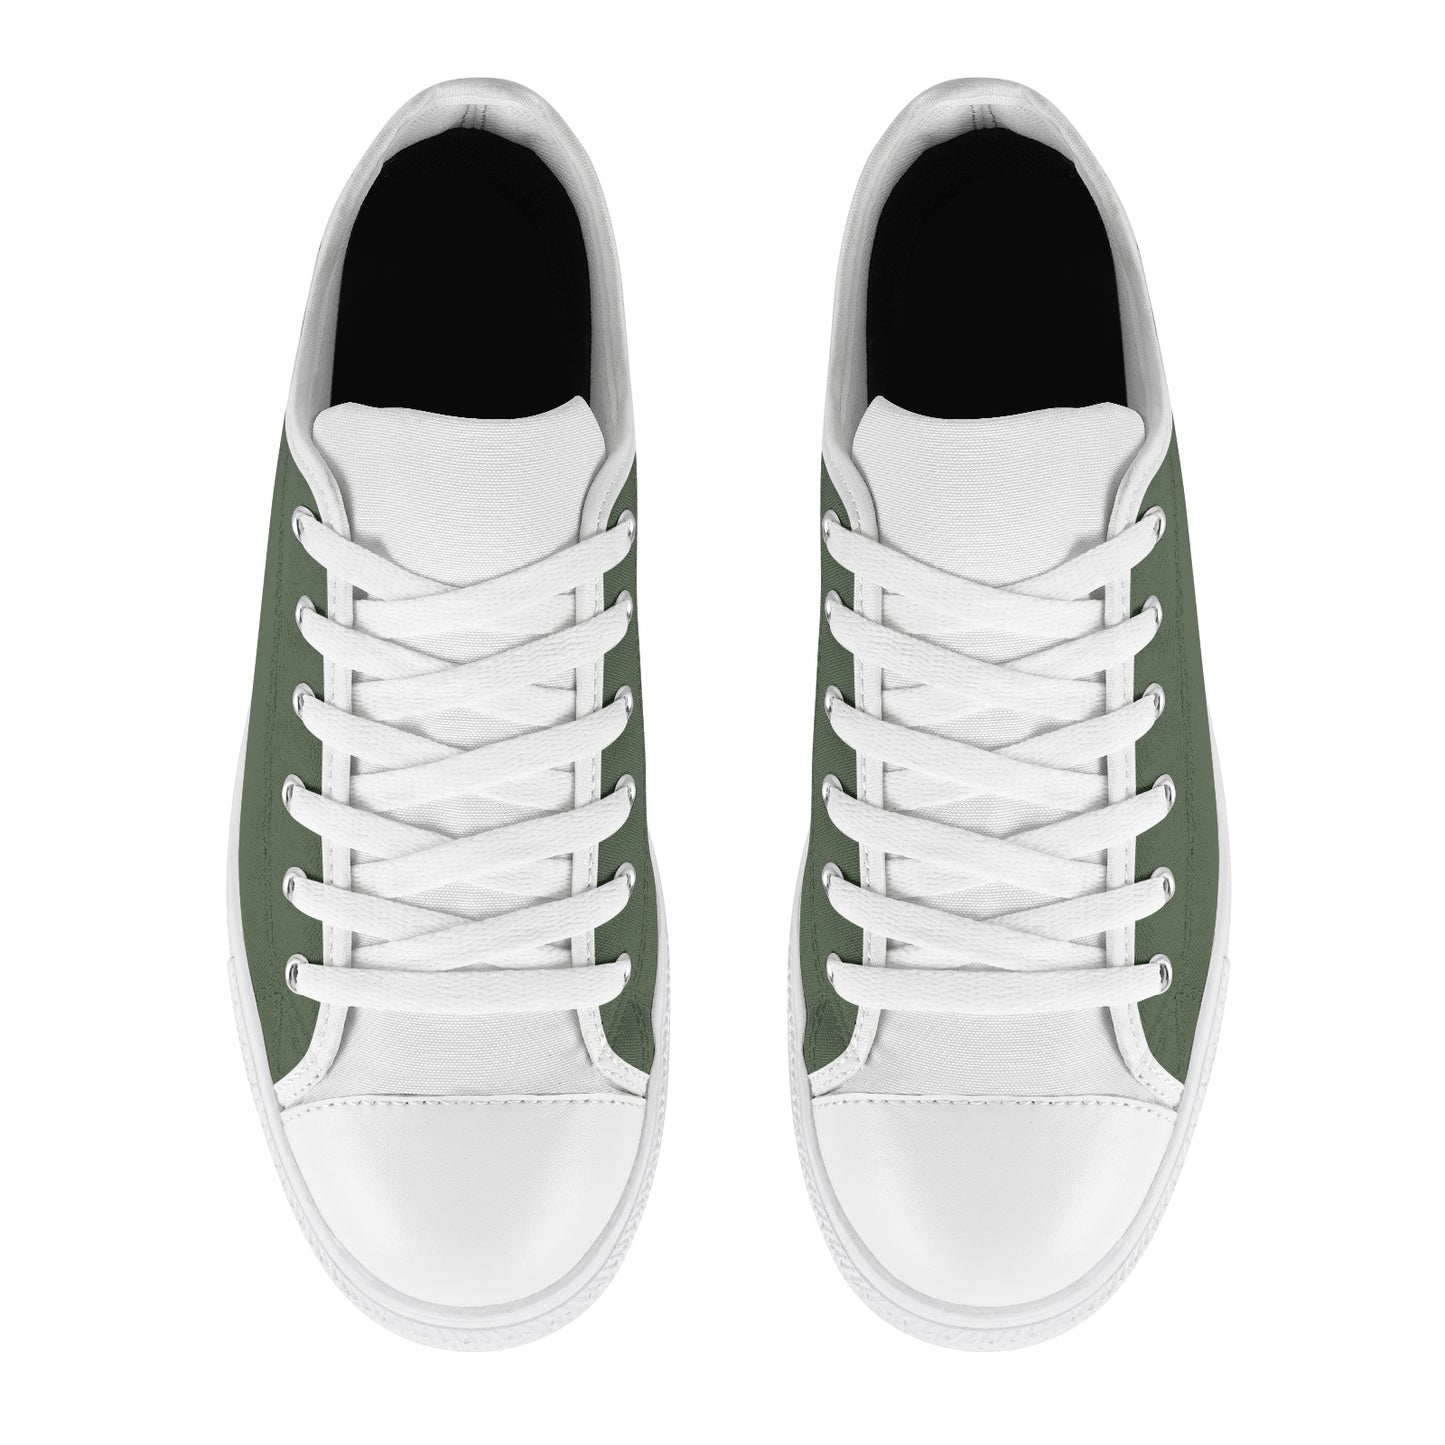 Men's Canvas Sneakers - Classic Green